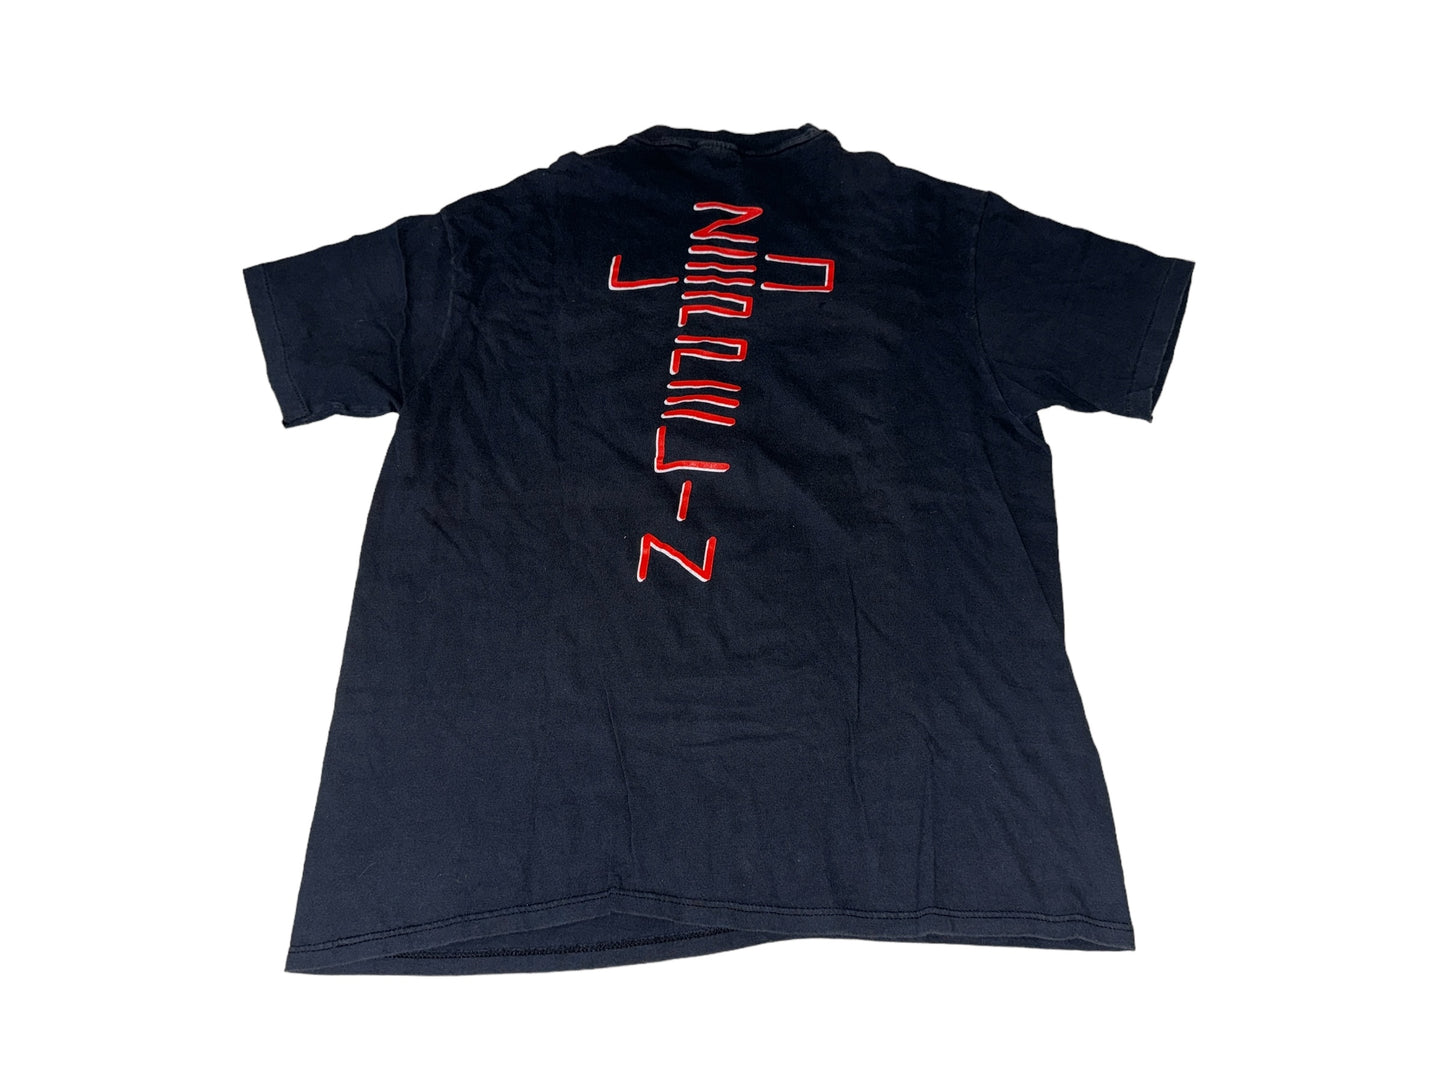 Vintage 90's Led Zeppelin T-Shirt